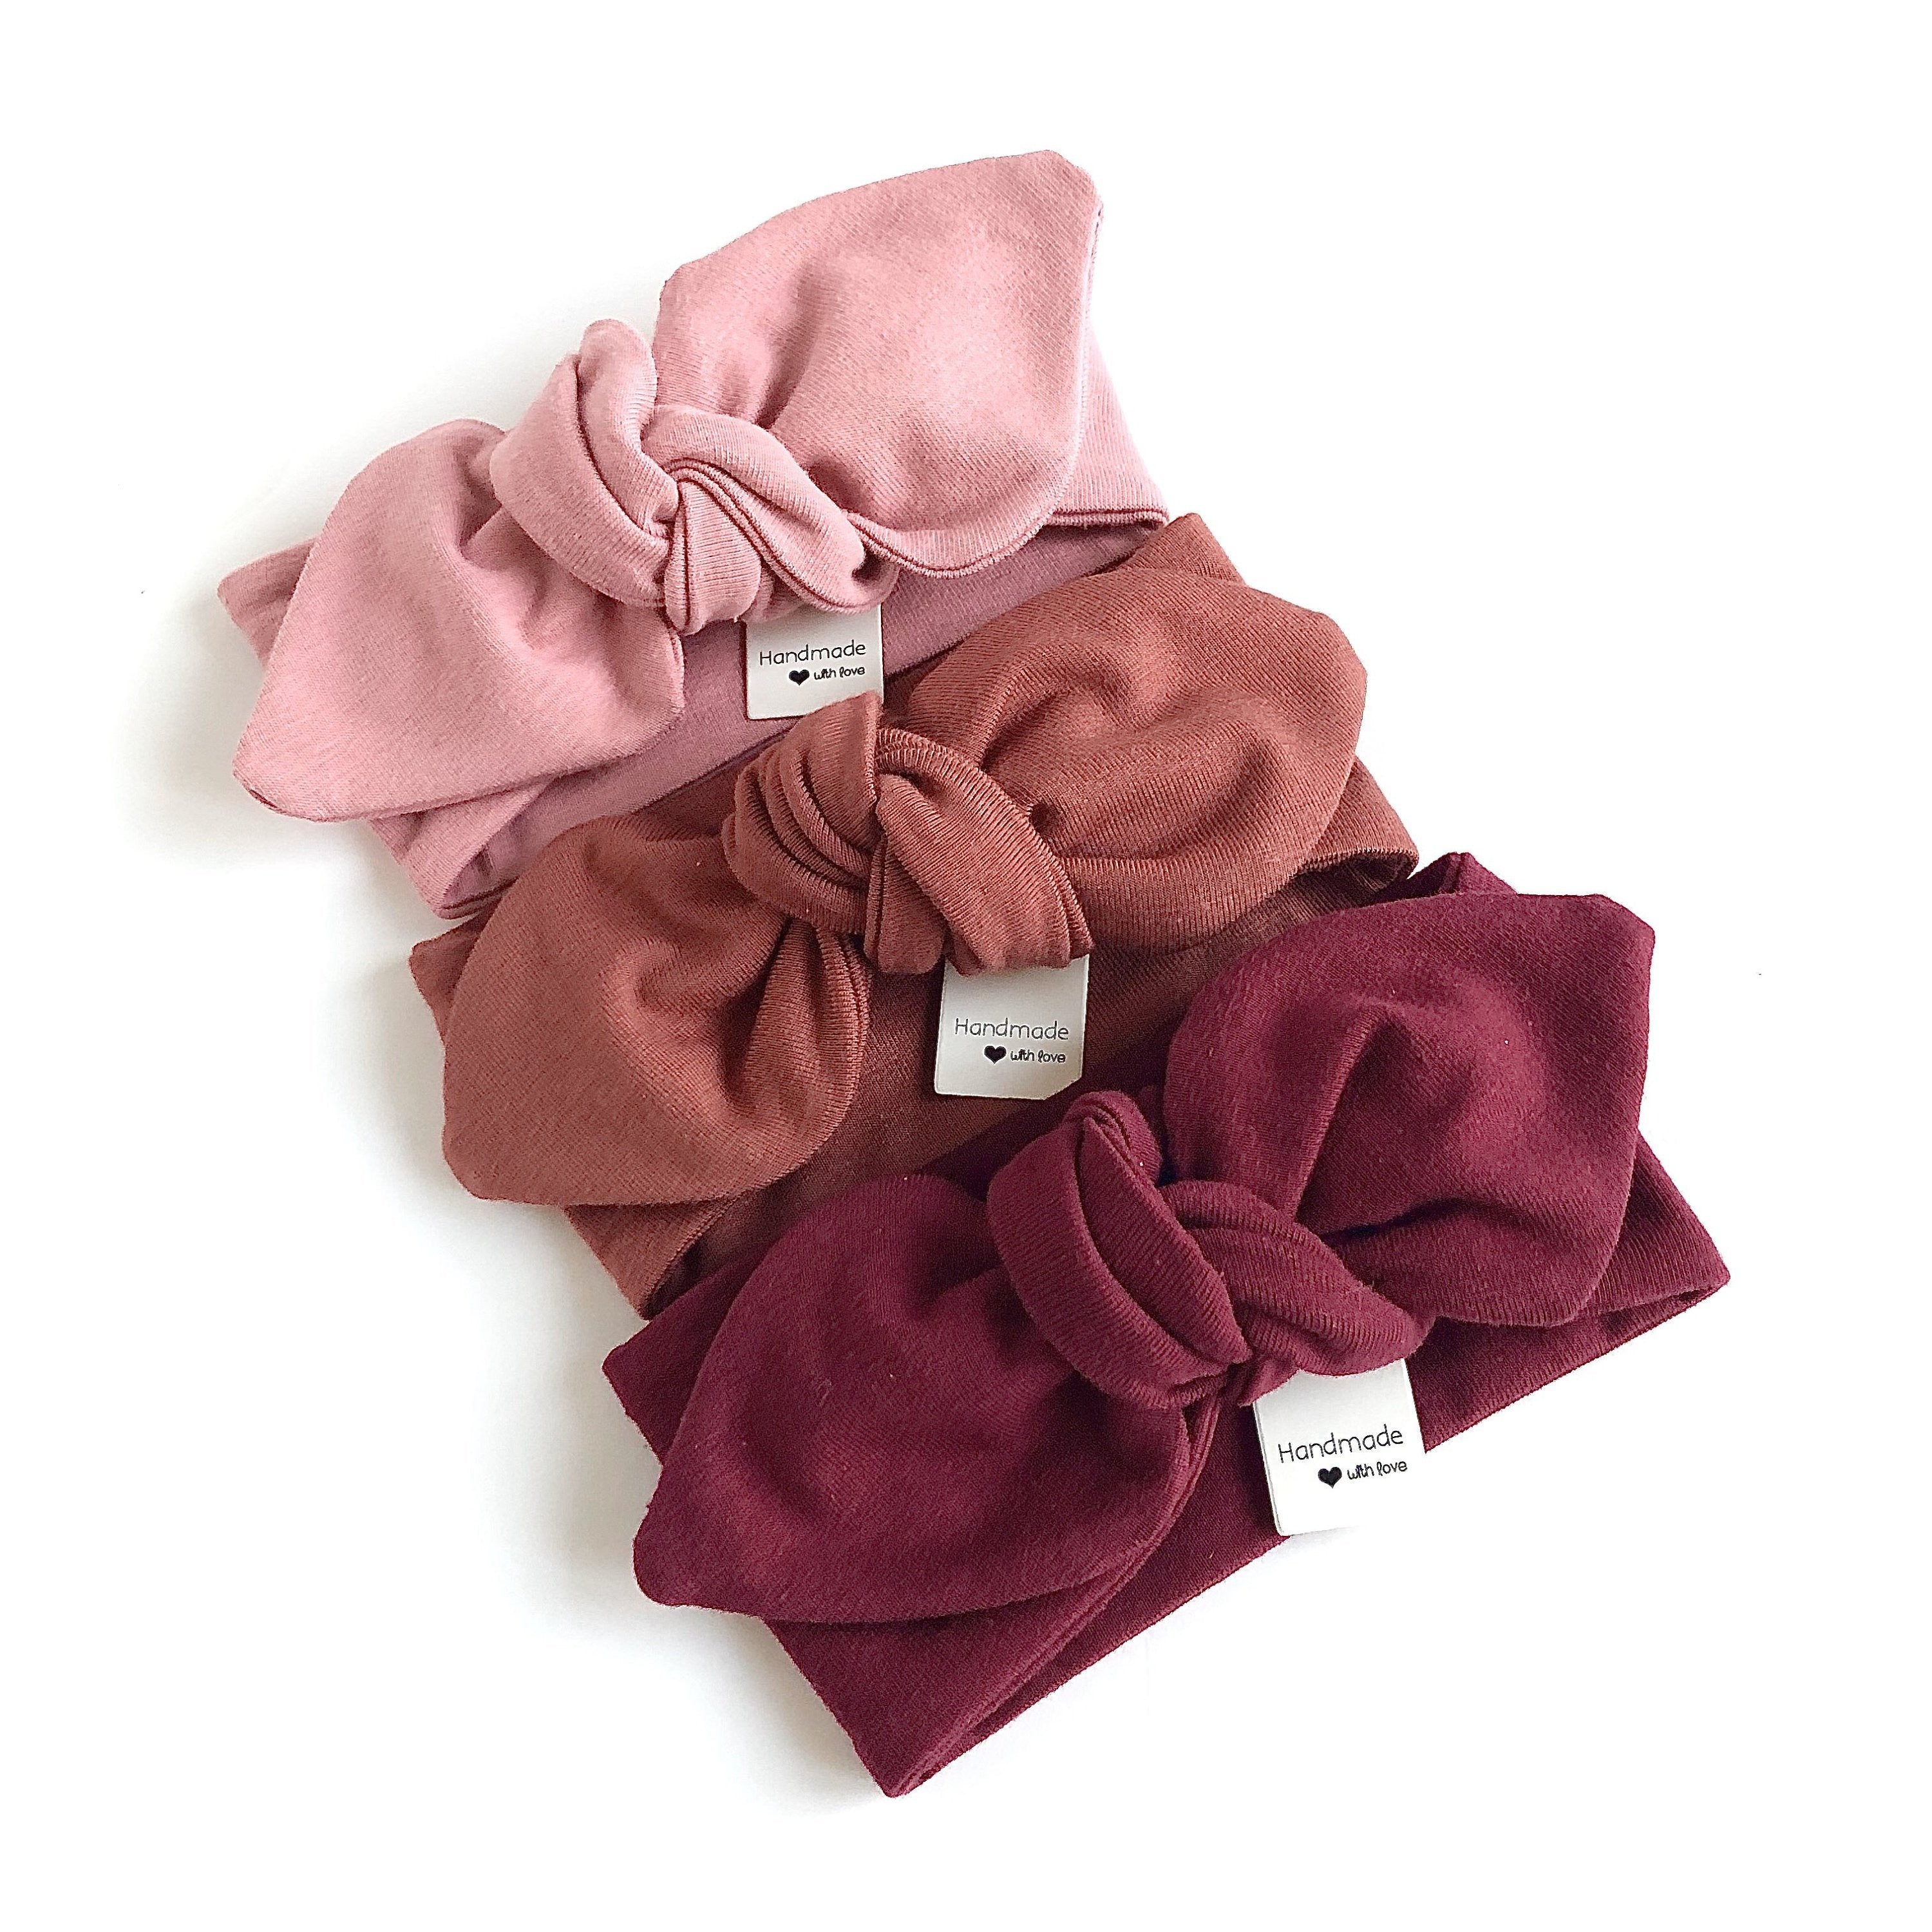 Rose, Marsala, Burgundy - Top Knot Headbands